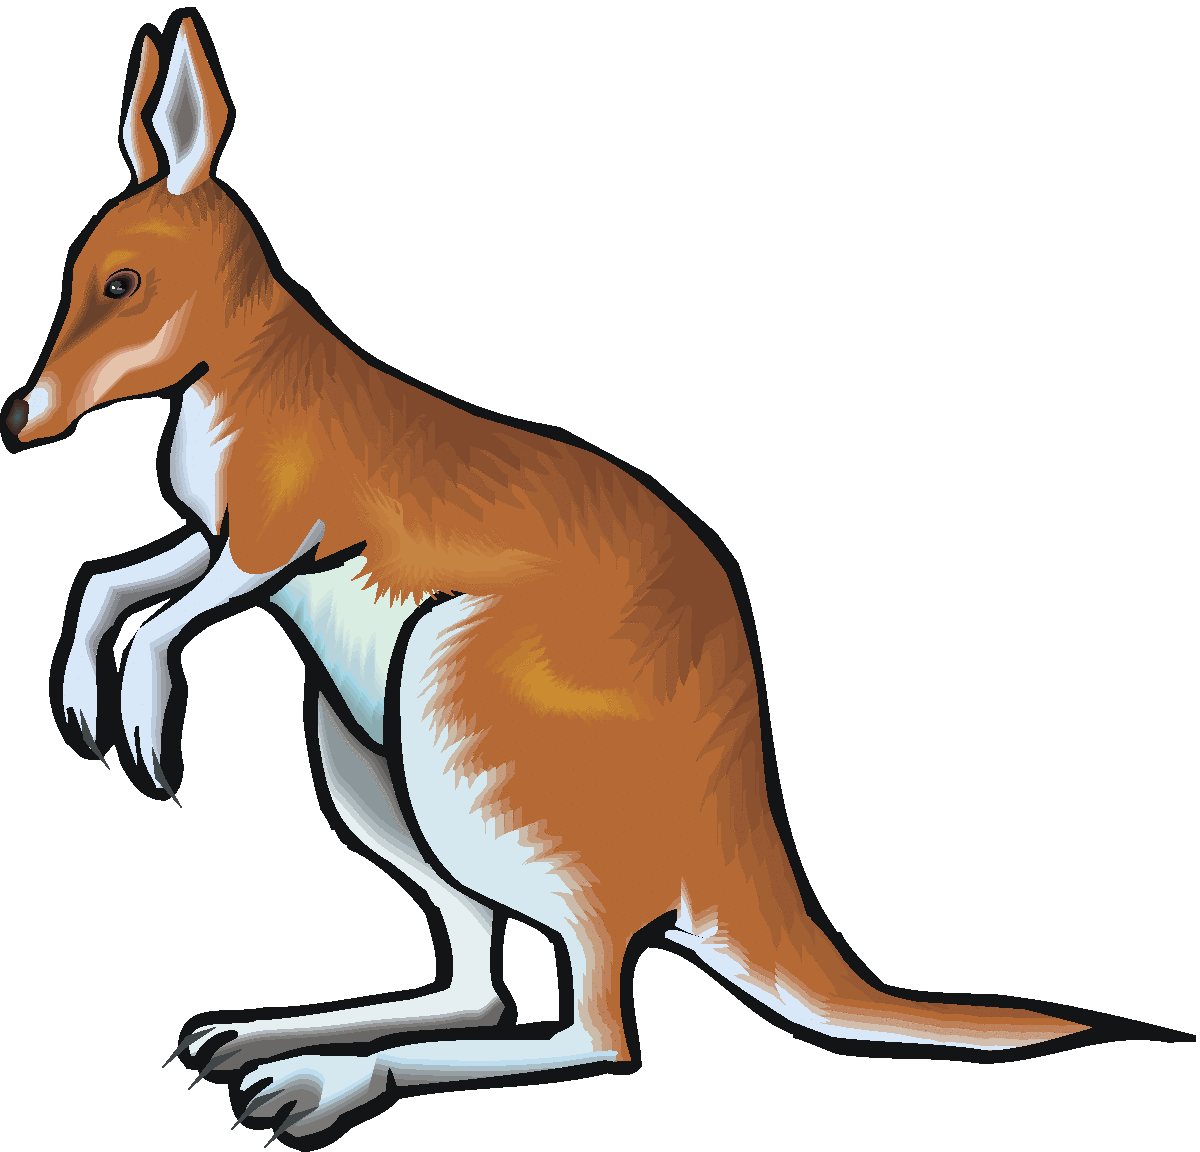 Tree Kangaroo clipart #15, Download drawings